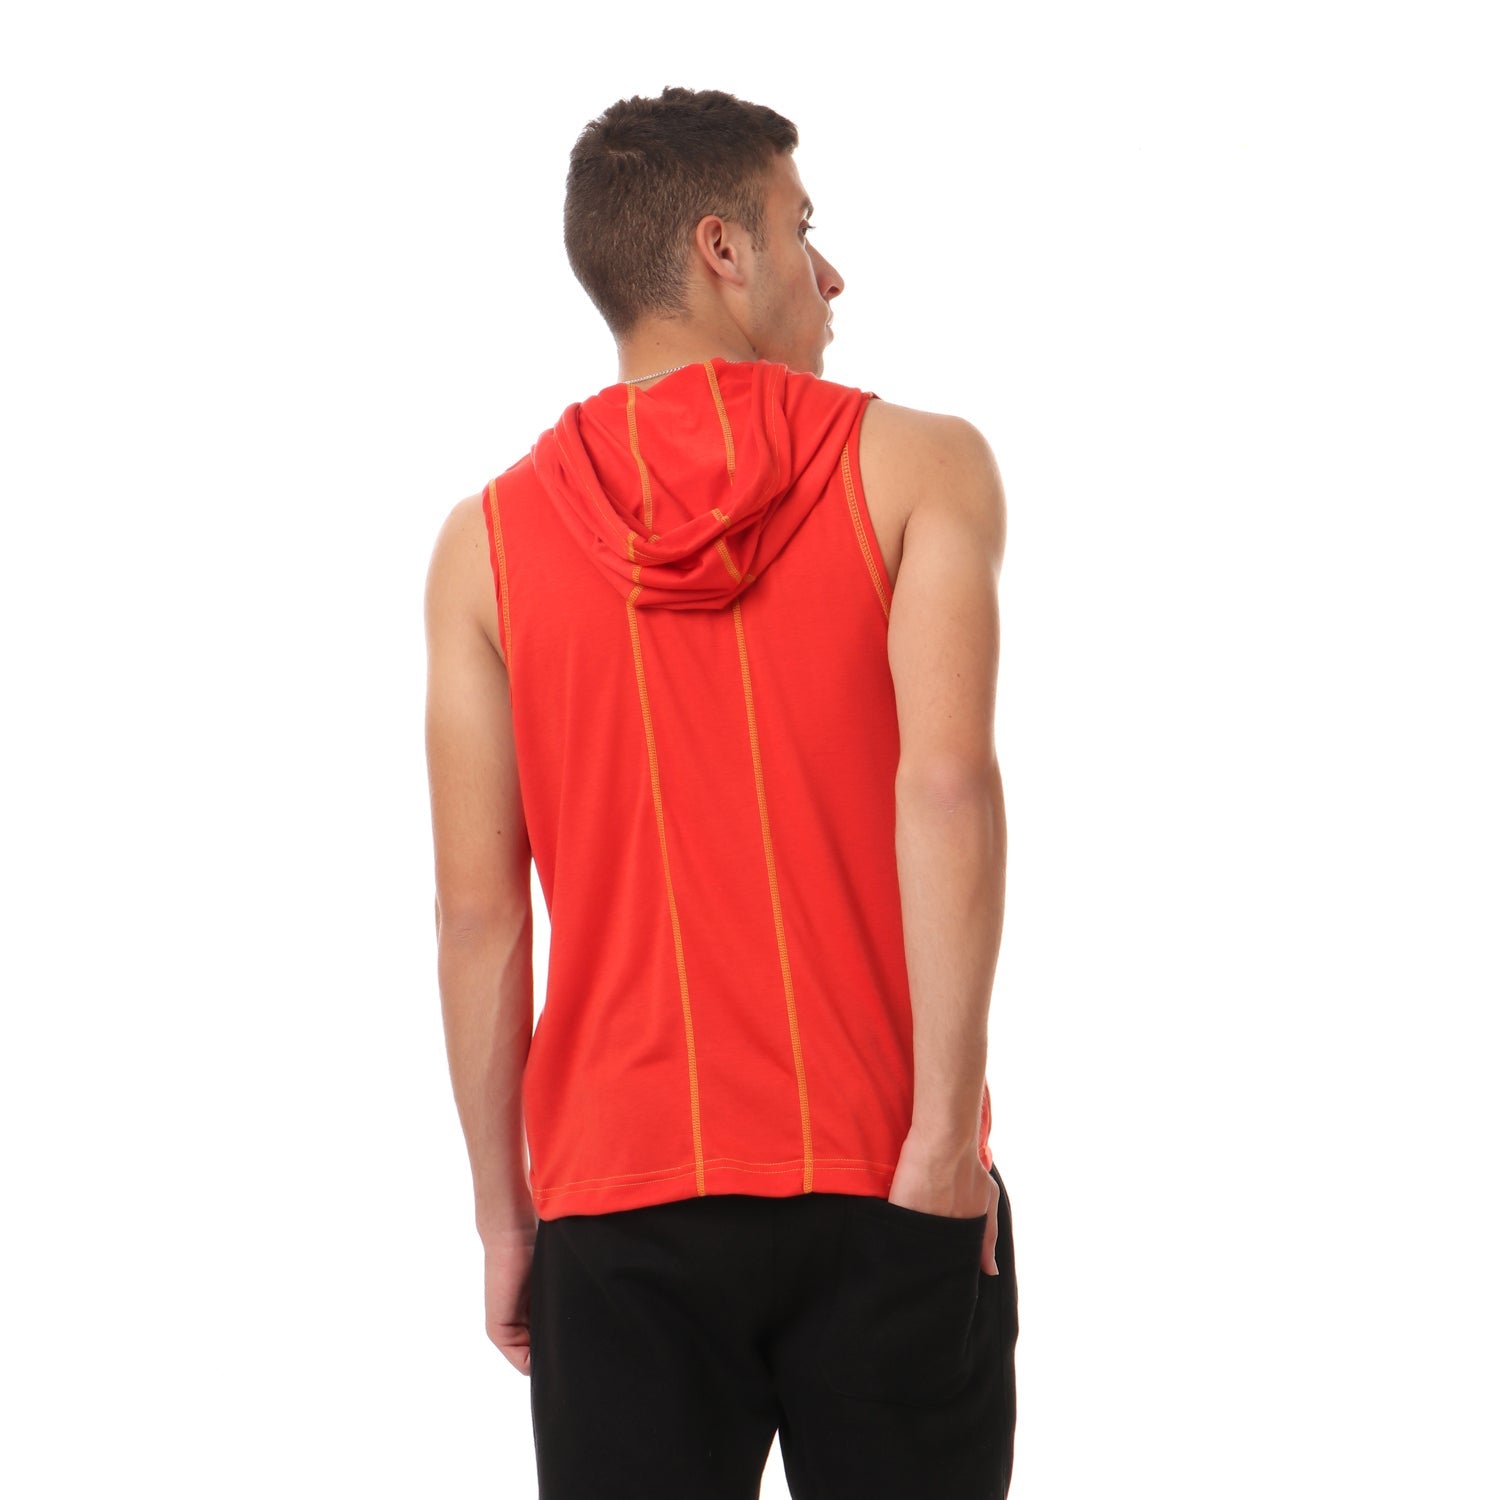 Viga contrast sleeveless hoodie - 5 colors